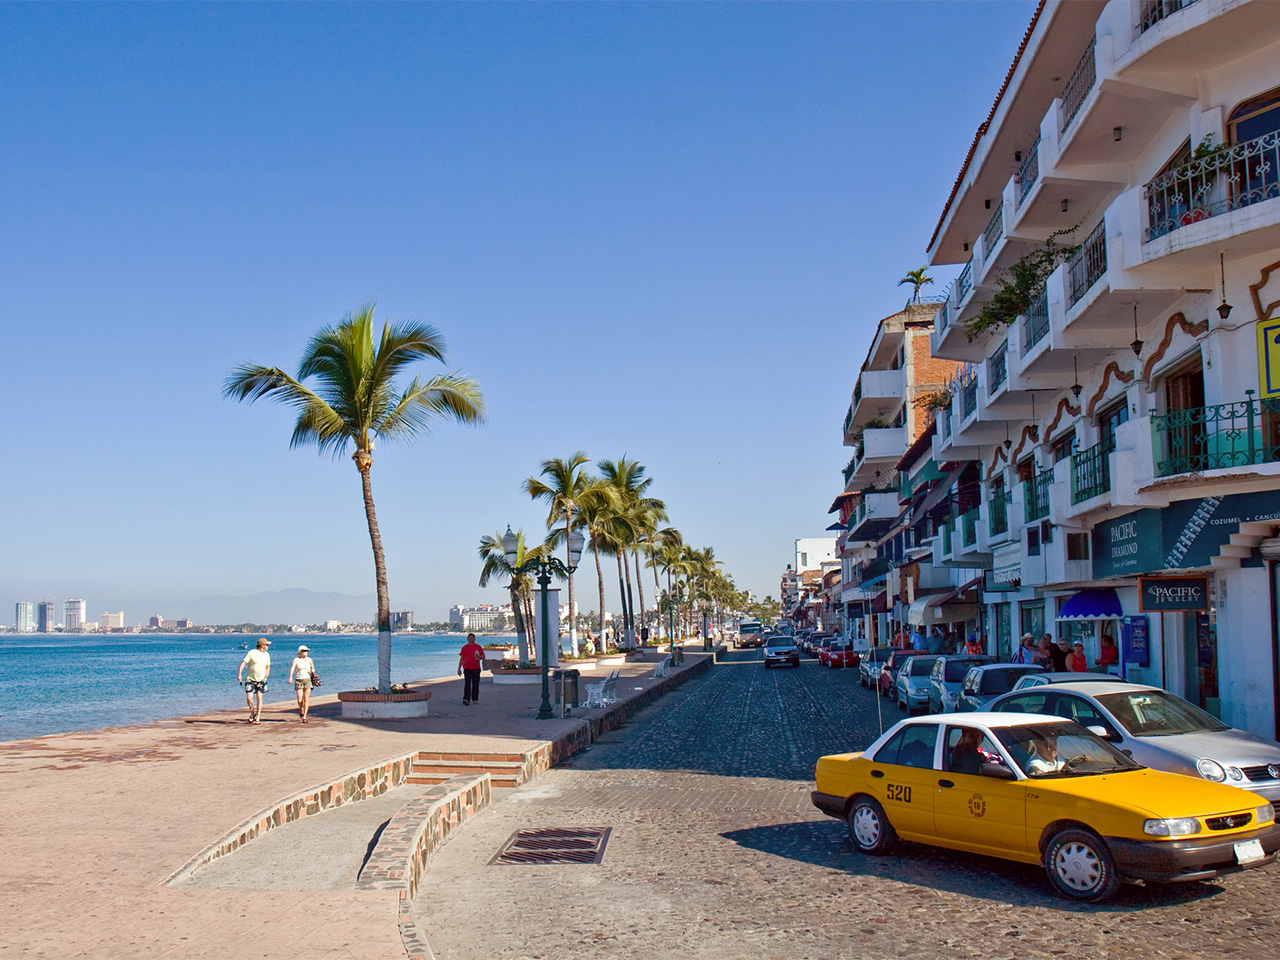 Palm trees line the main road along the coast in Puerto Vallarta.